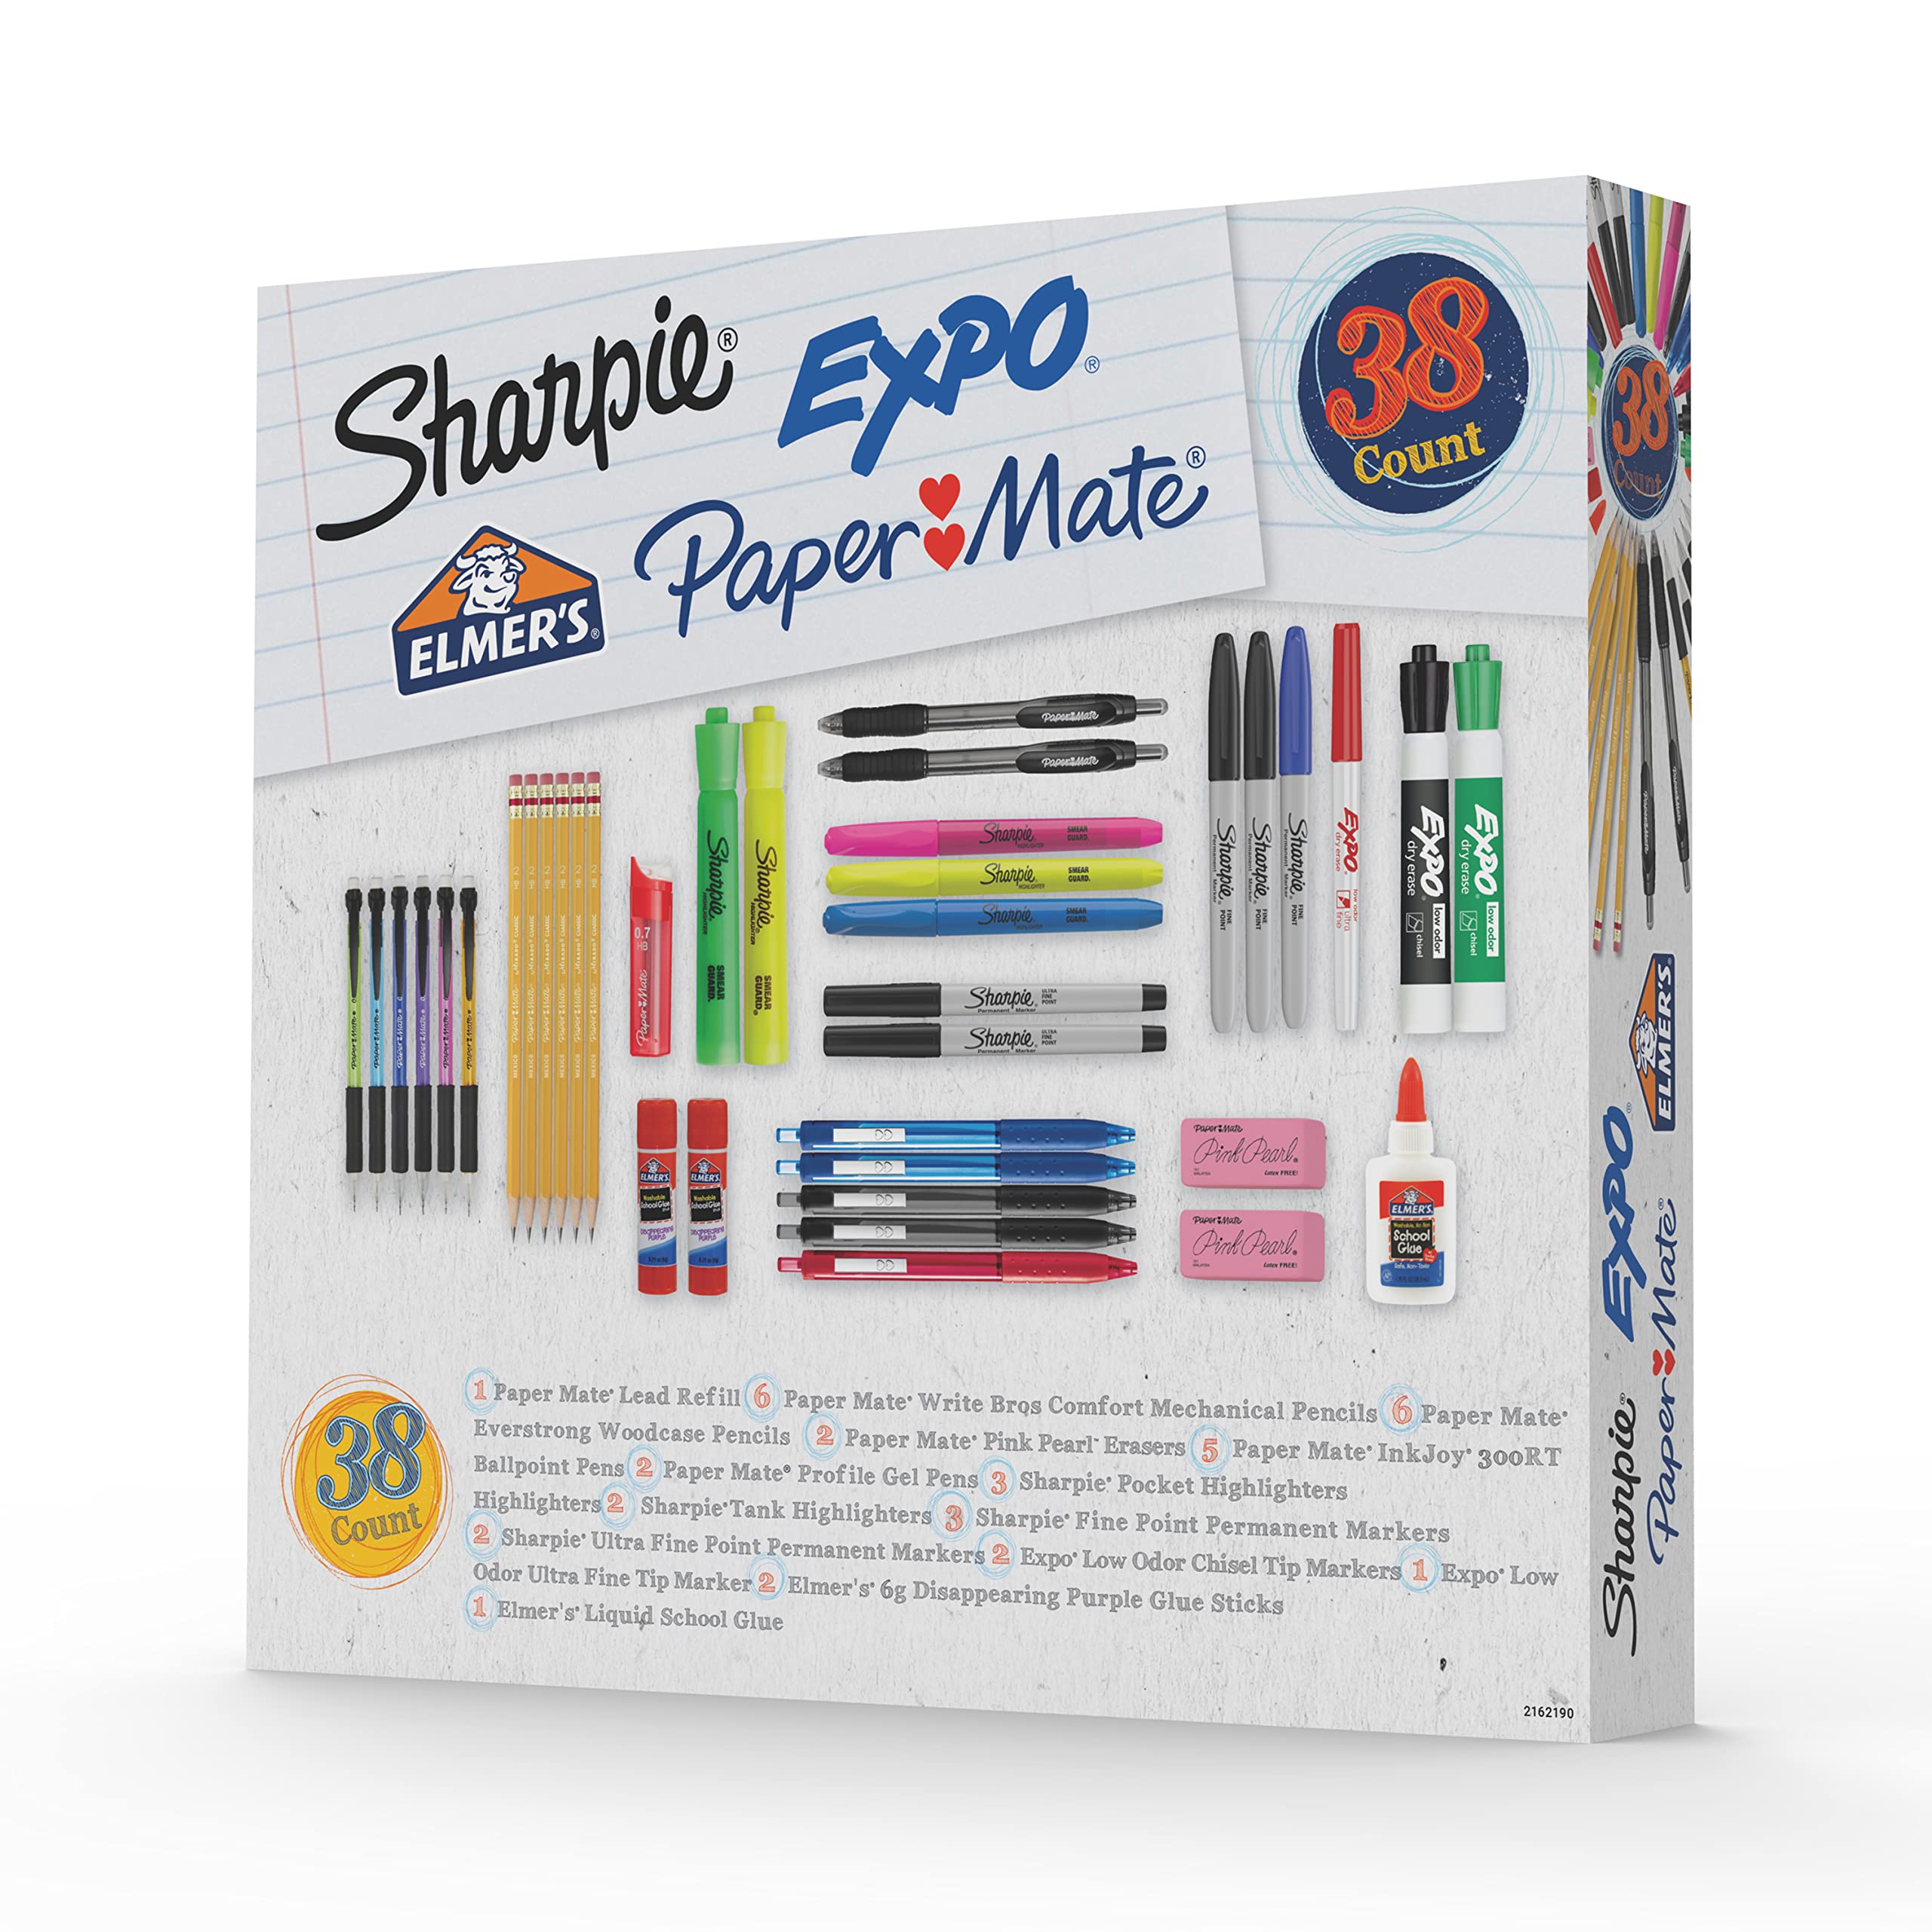 SHARPIE 38pcs School Supplies Kit, Highlighters, Mechanical Pencils, Glue Sticks, Erasers, Permanent Markers, Gel Pens, Pencils etc for $11.83